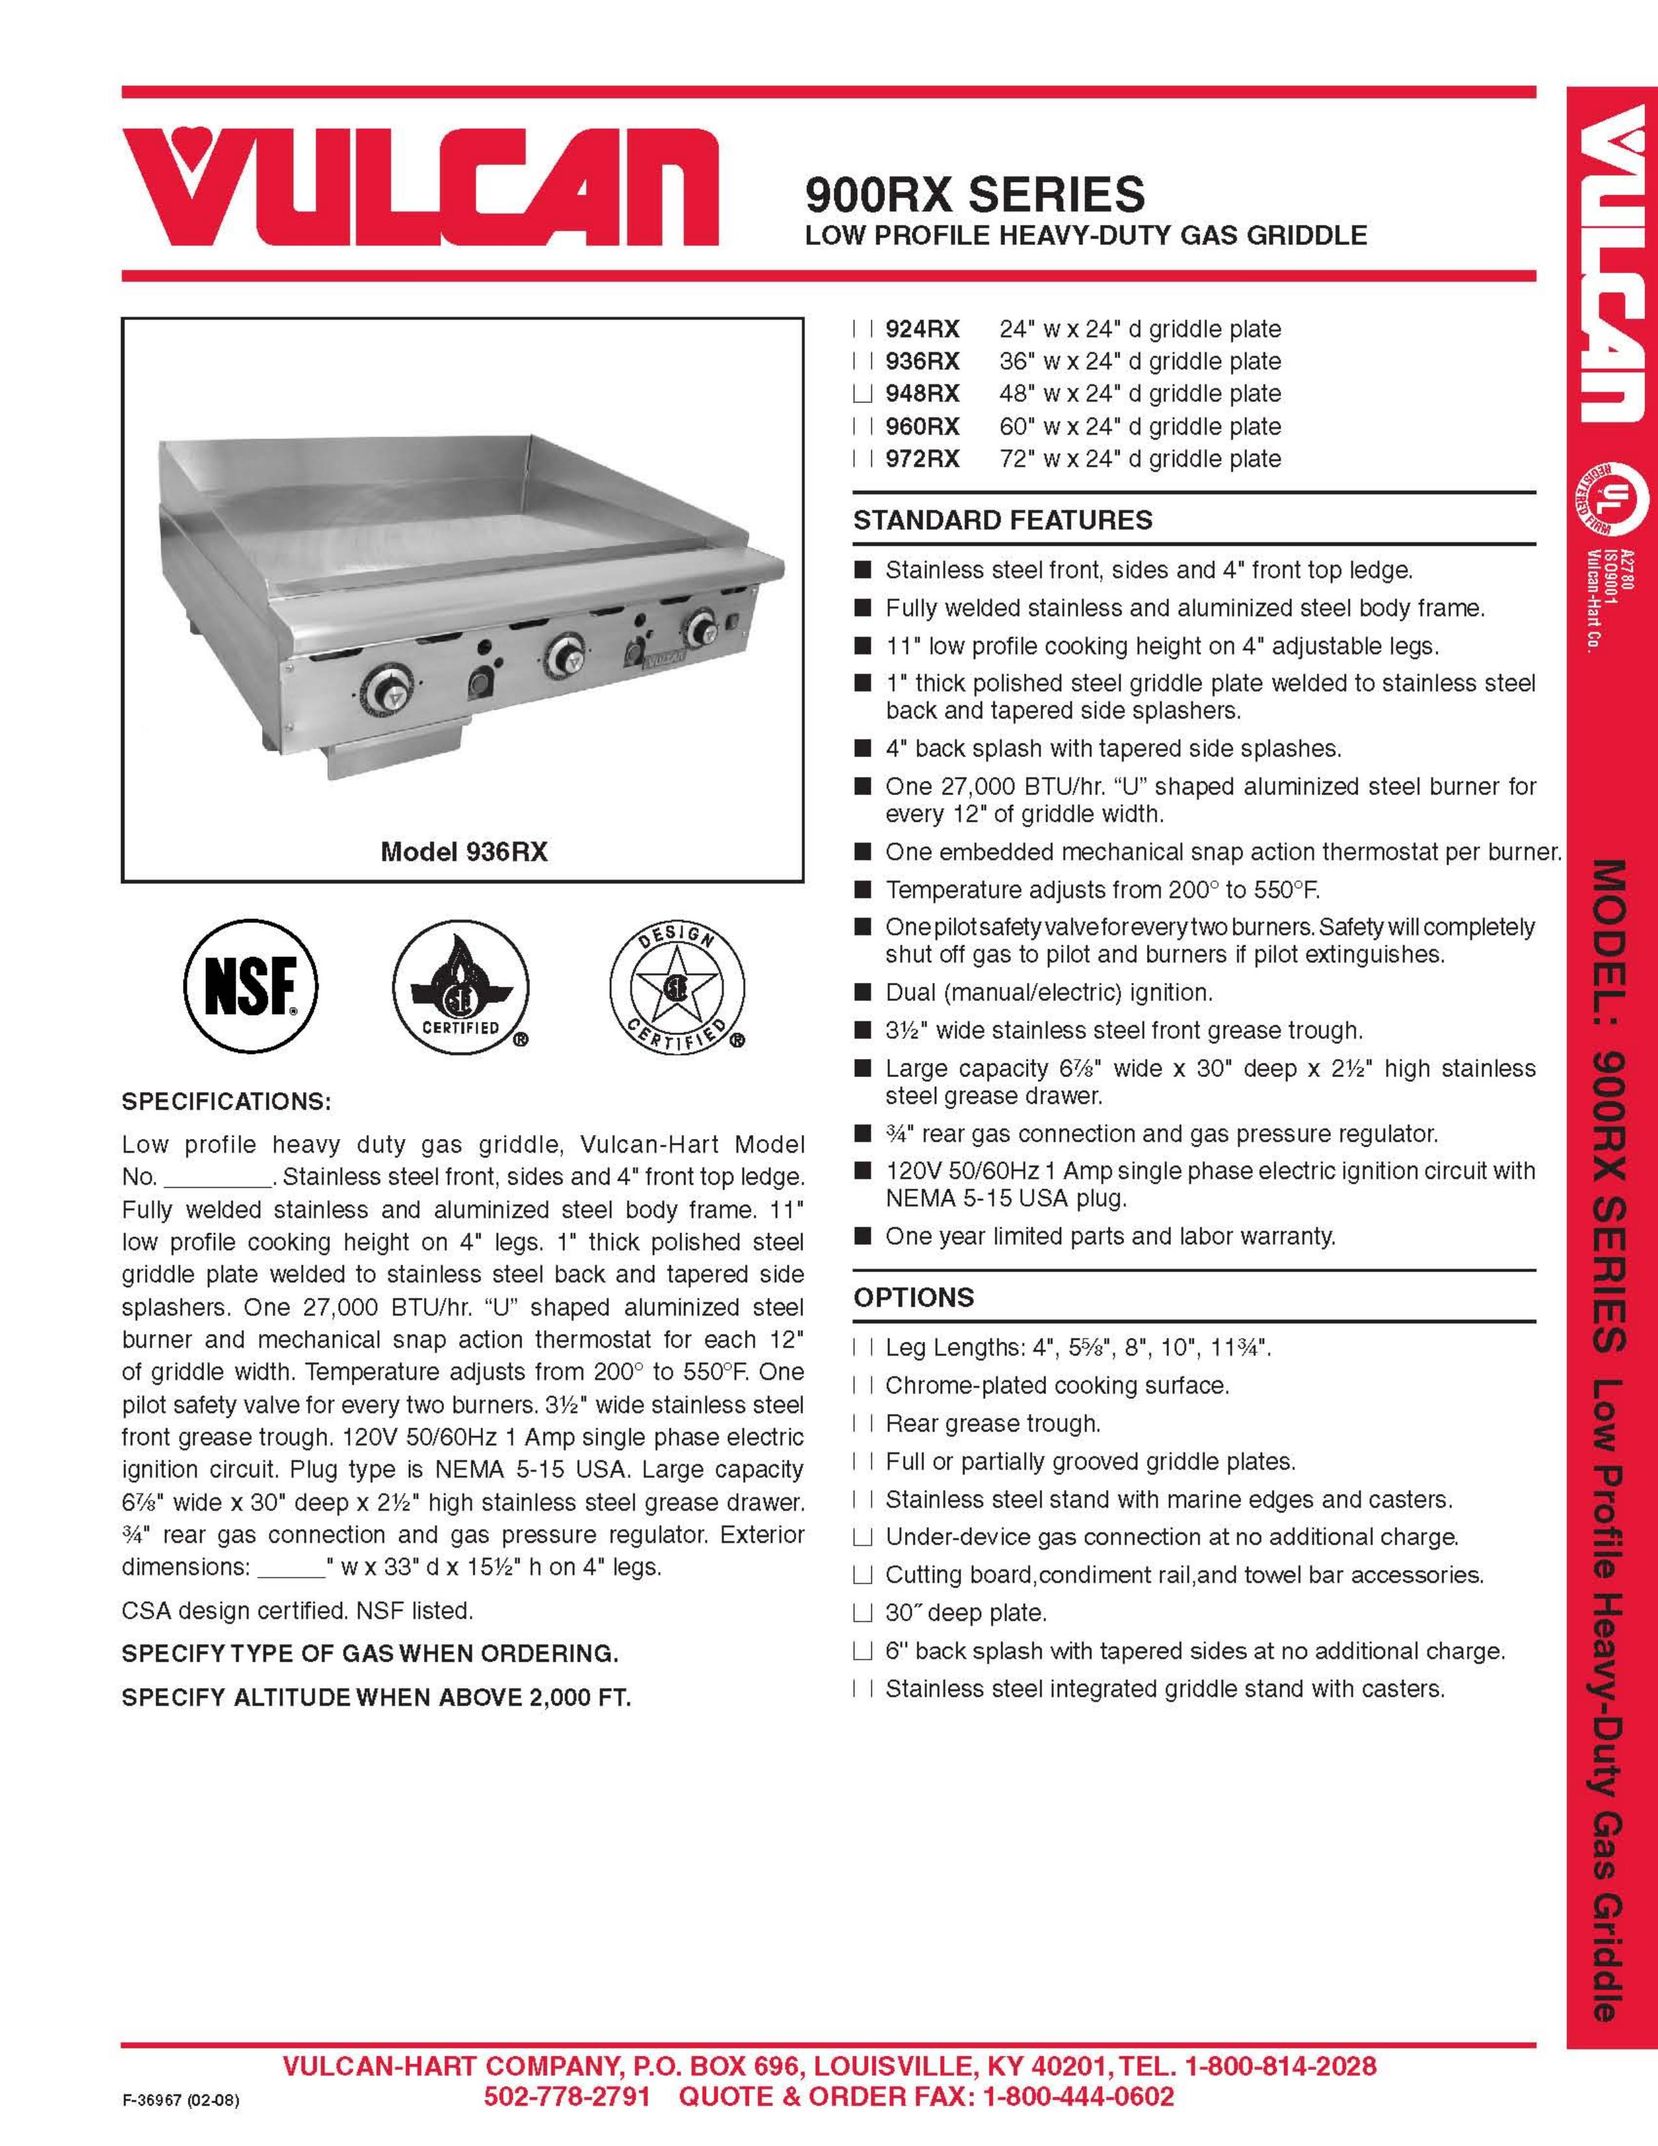 Vulcan-Hart 960RX Kitchen Grill User Manual